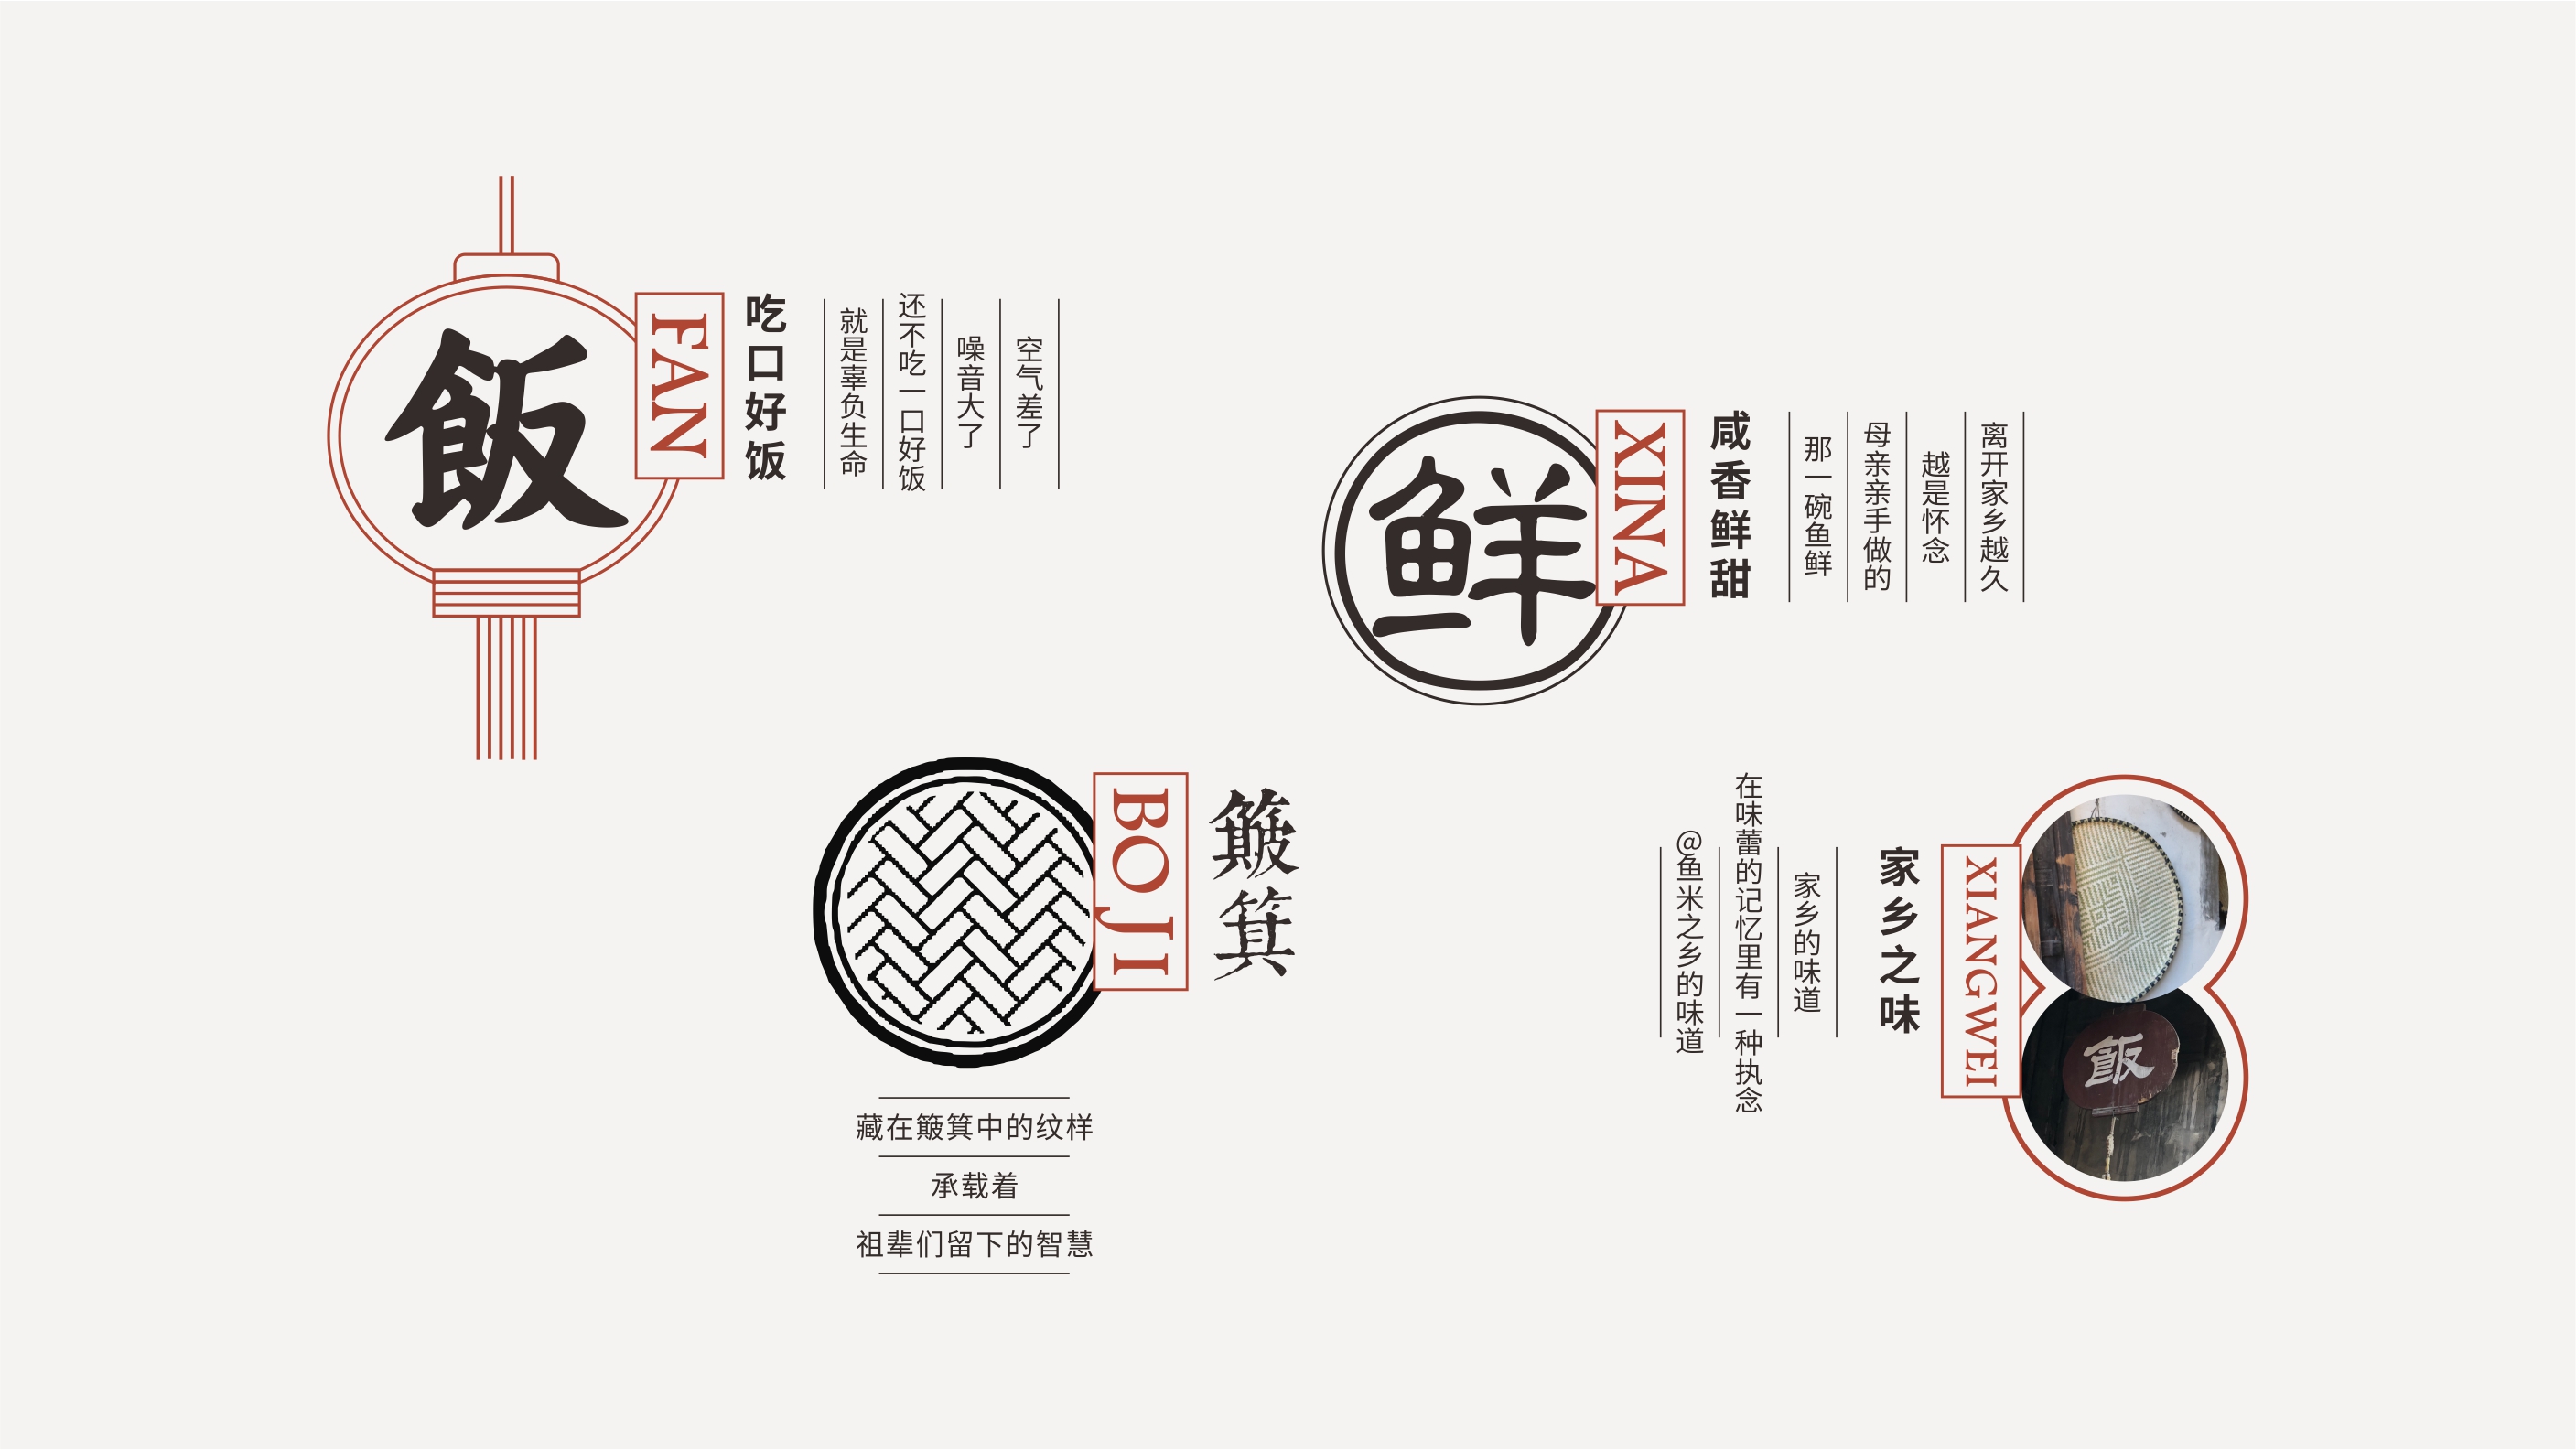 18P Restaurant Design Scheme Containing Chinese Culture